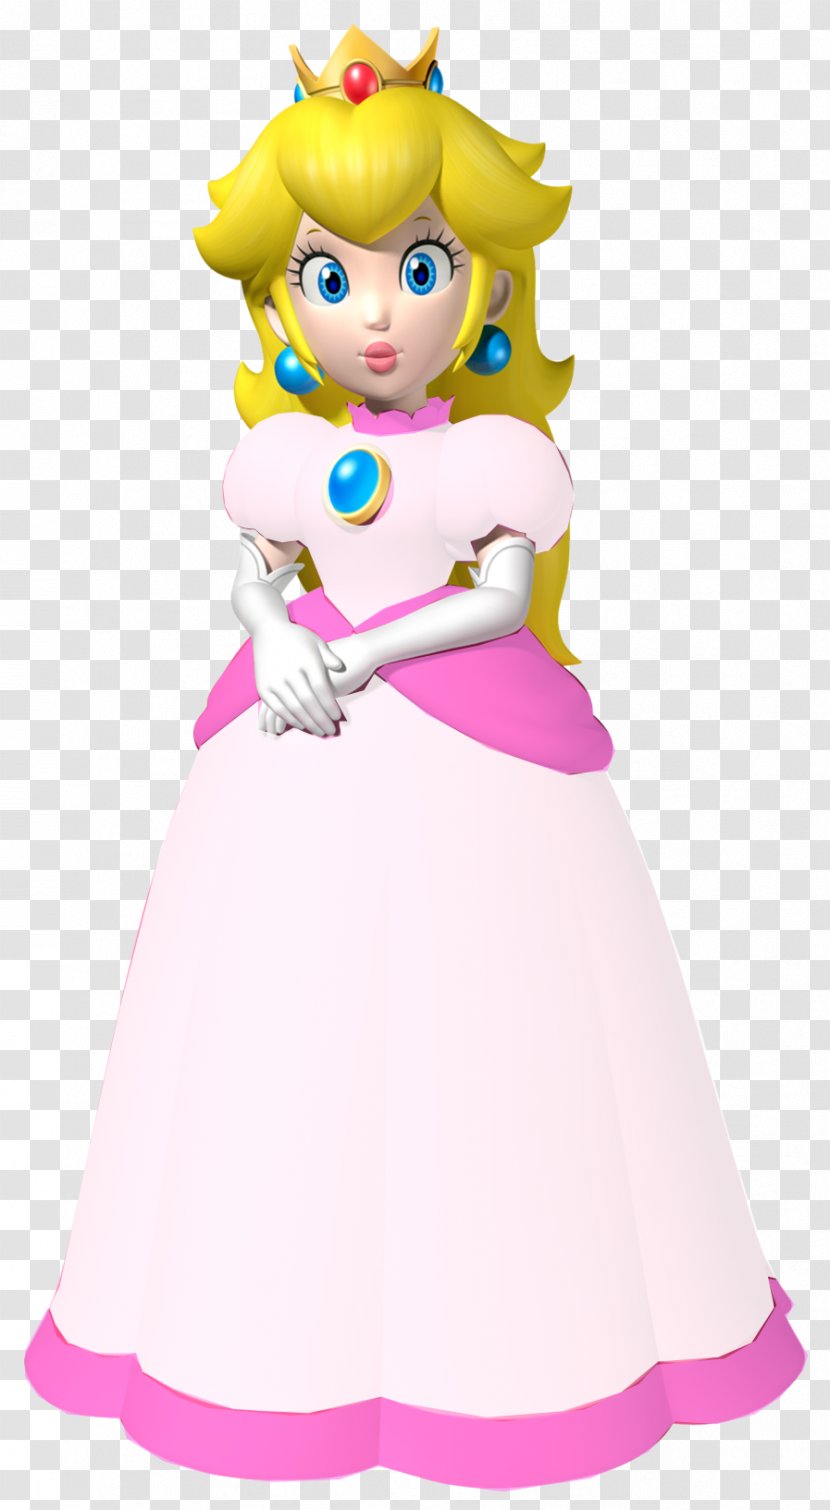 Mario Bros. Princess Peach Bowser Rosalina - Series Transparent PNG